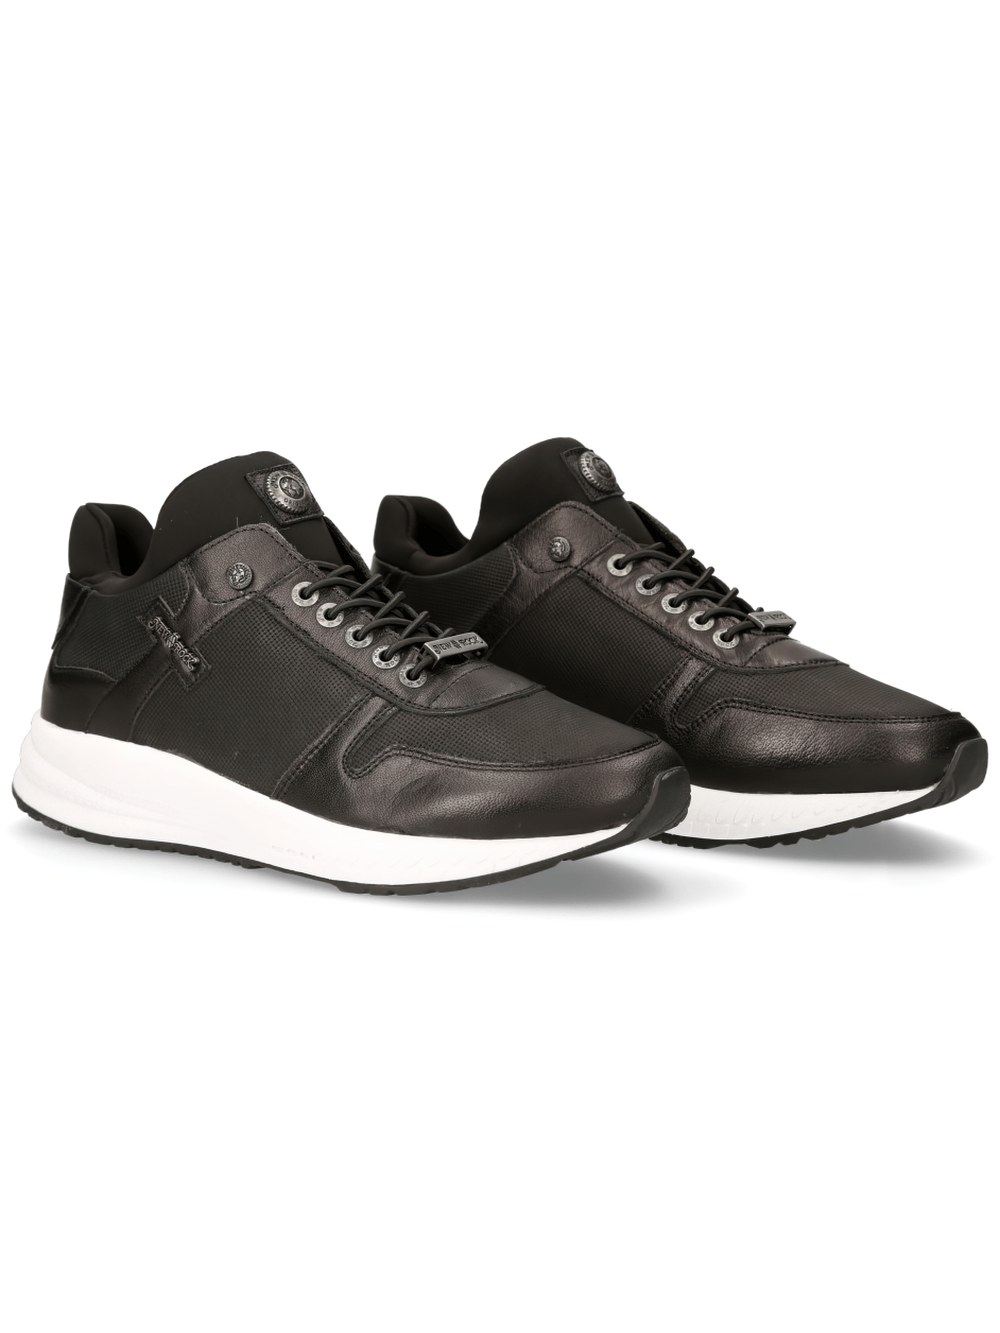 NEW ROCK Sleek Urban Unisex Black Sports Sneakers